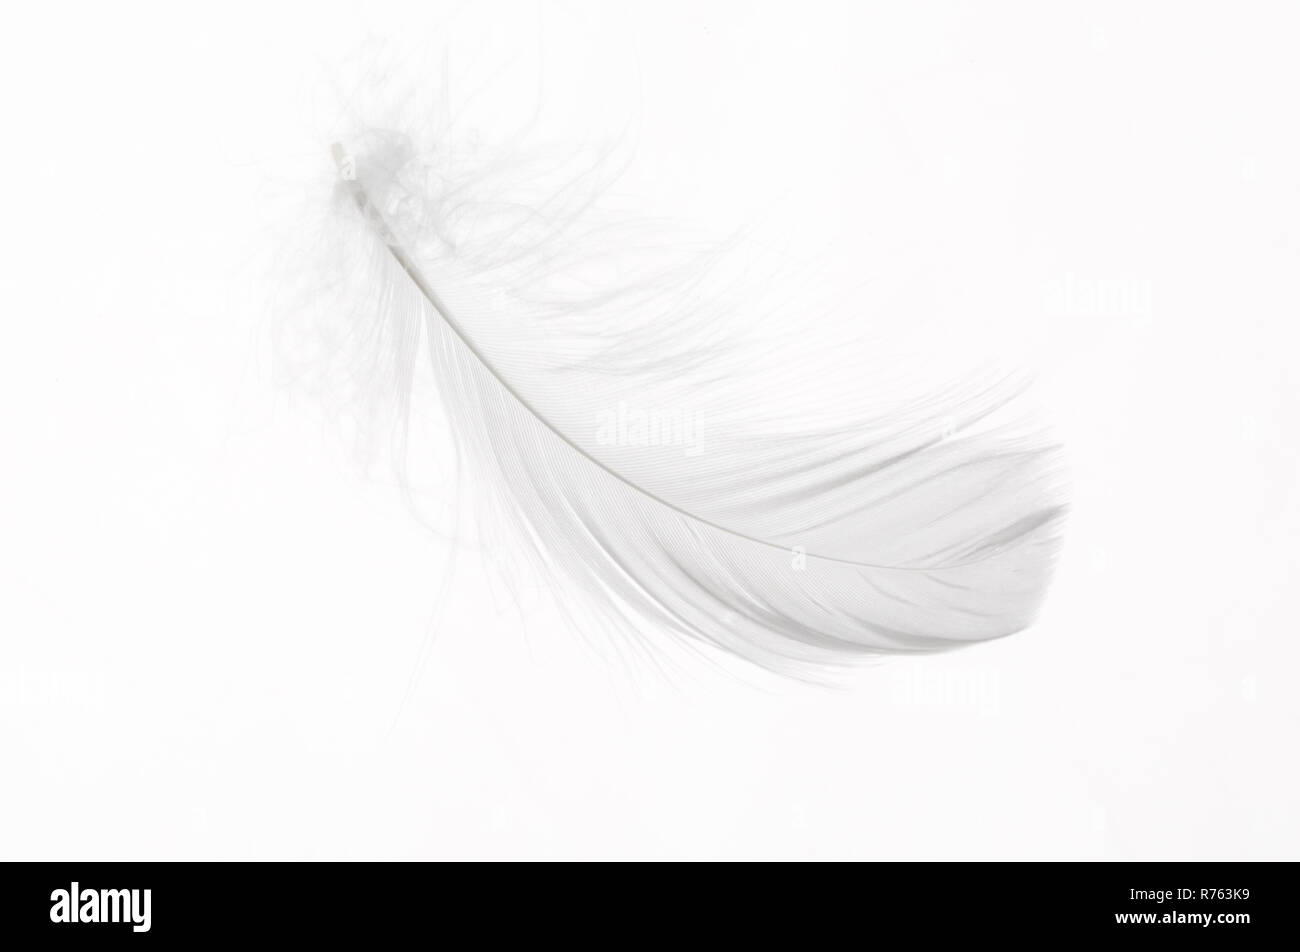 Pluma blanca fotografías e imágenes de alta resolución - Alamy